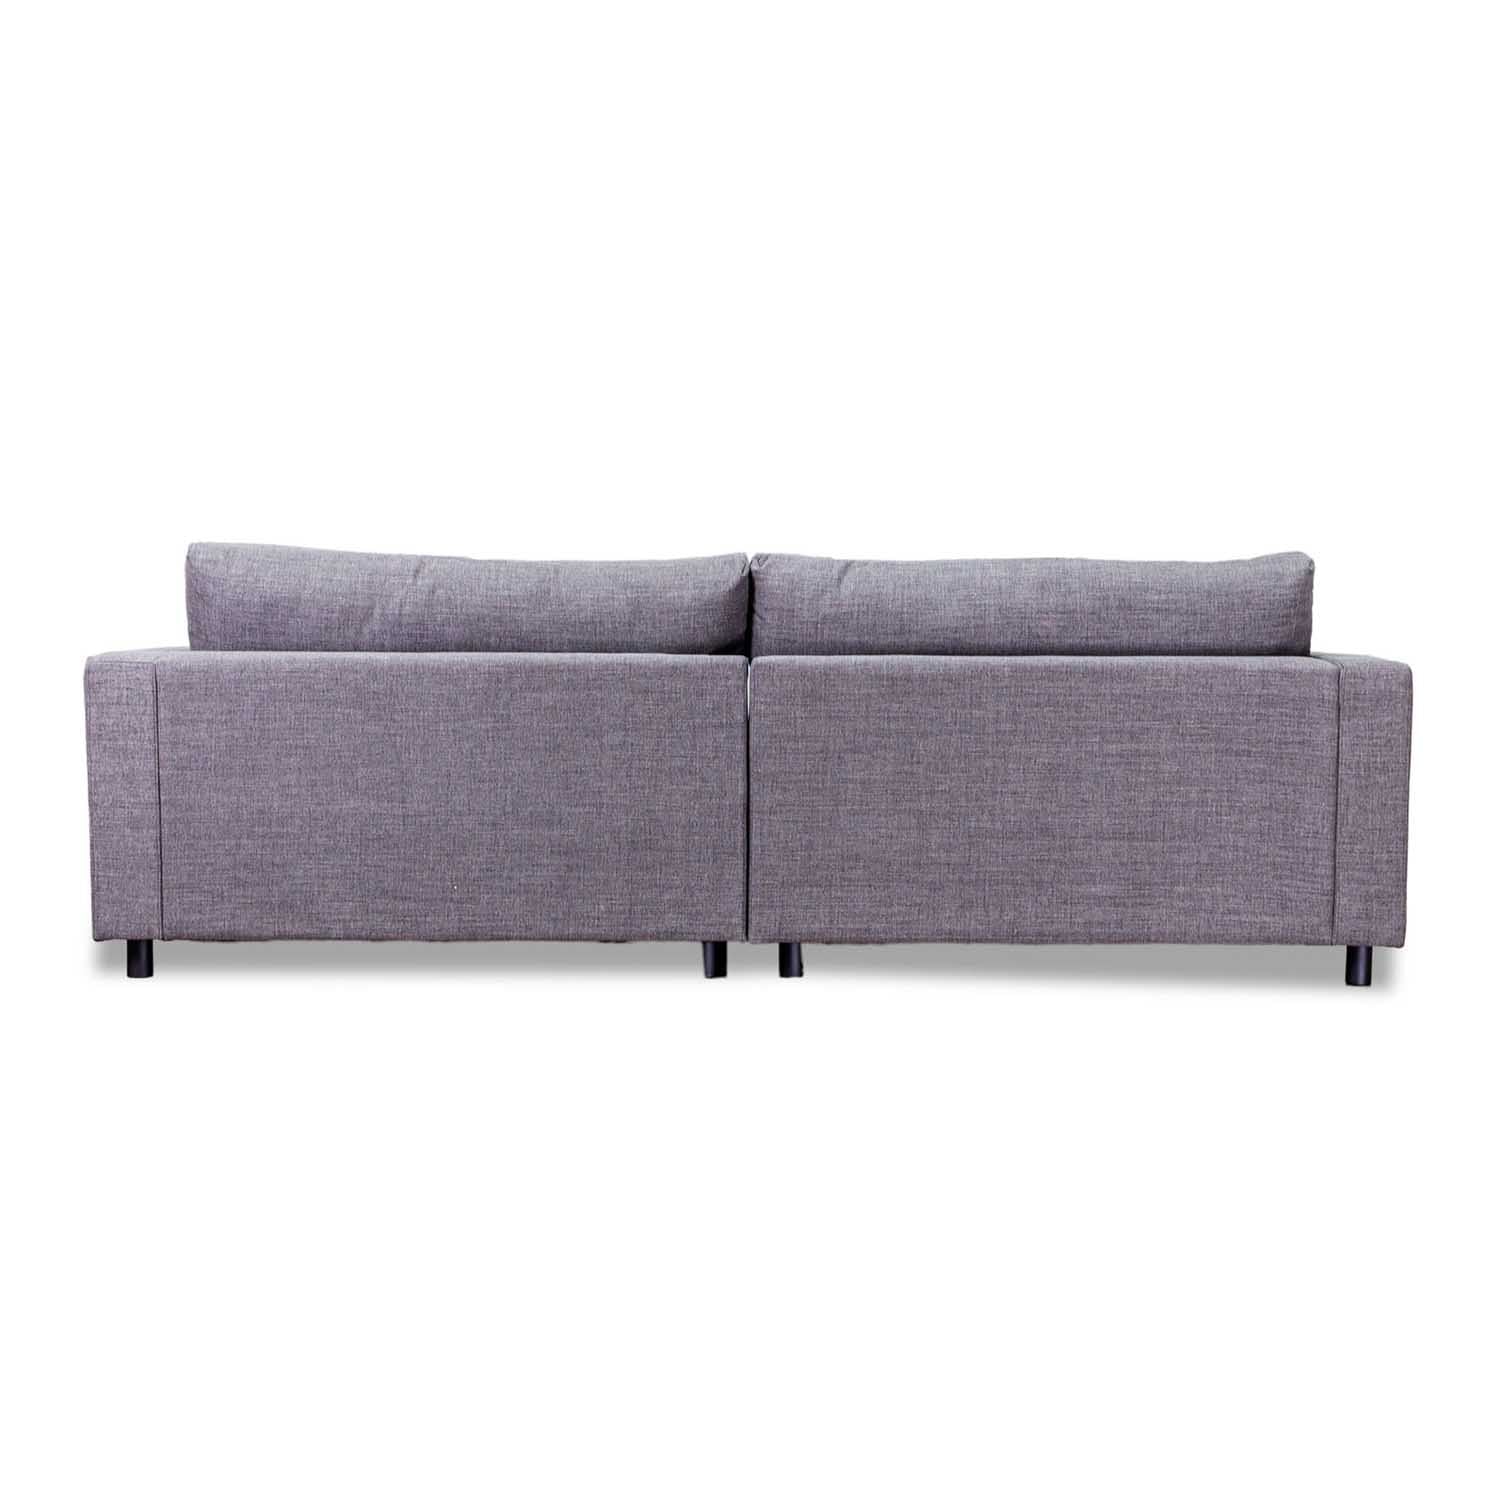 Sorrento Fabric 4 Seat Sofa in Fleur Bark